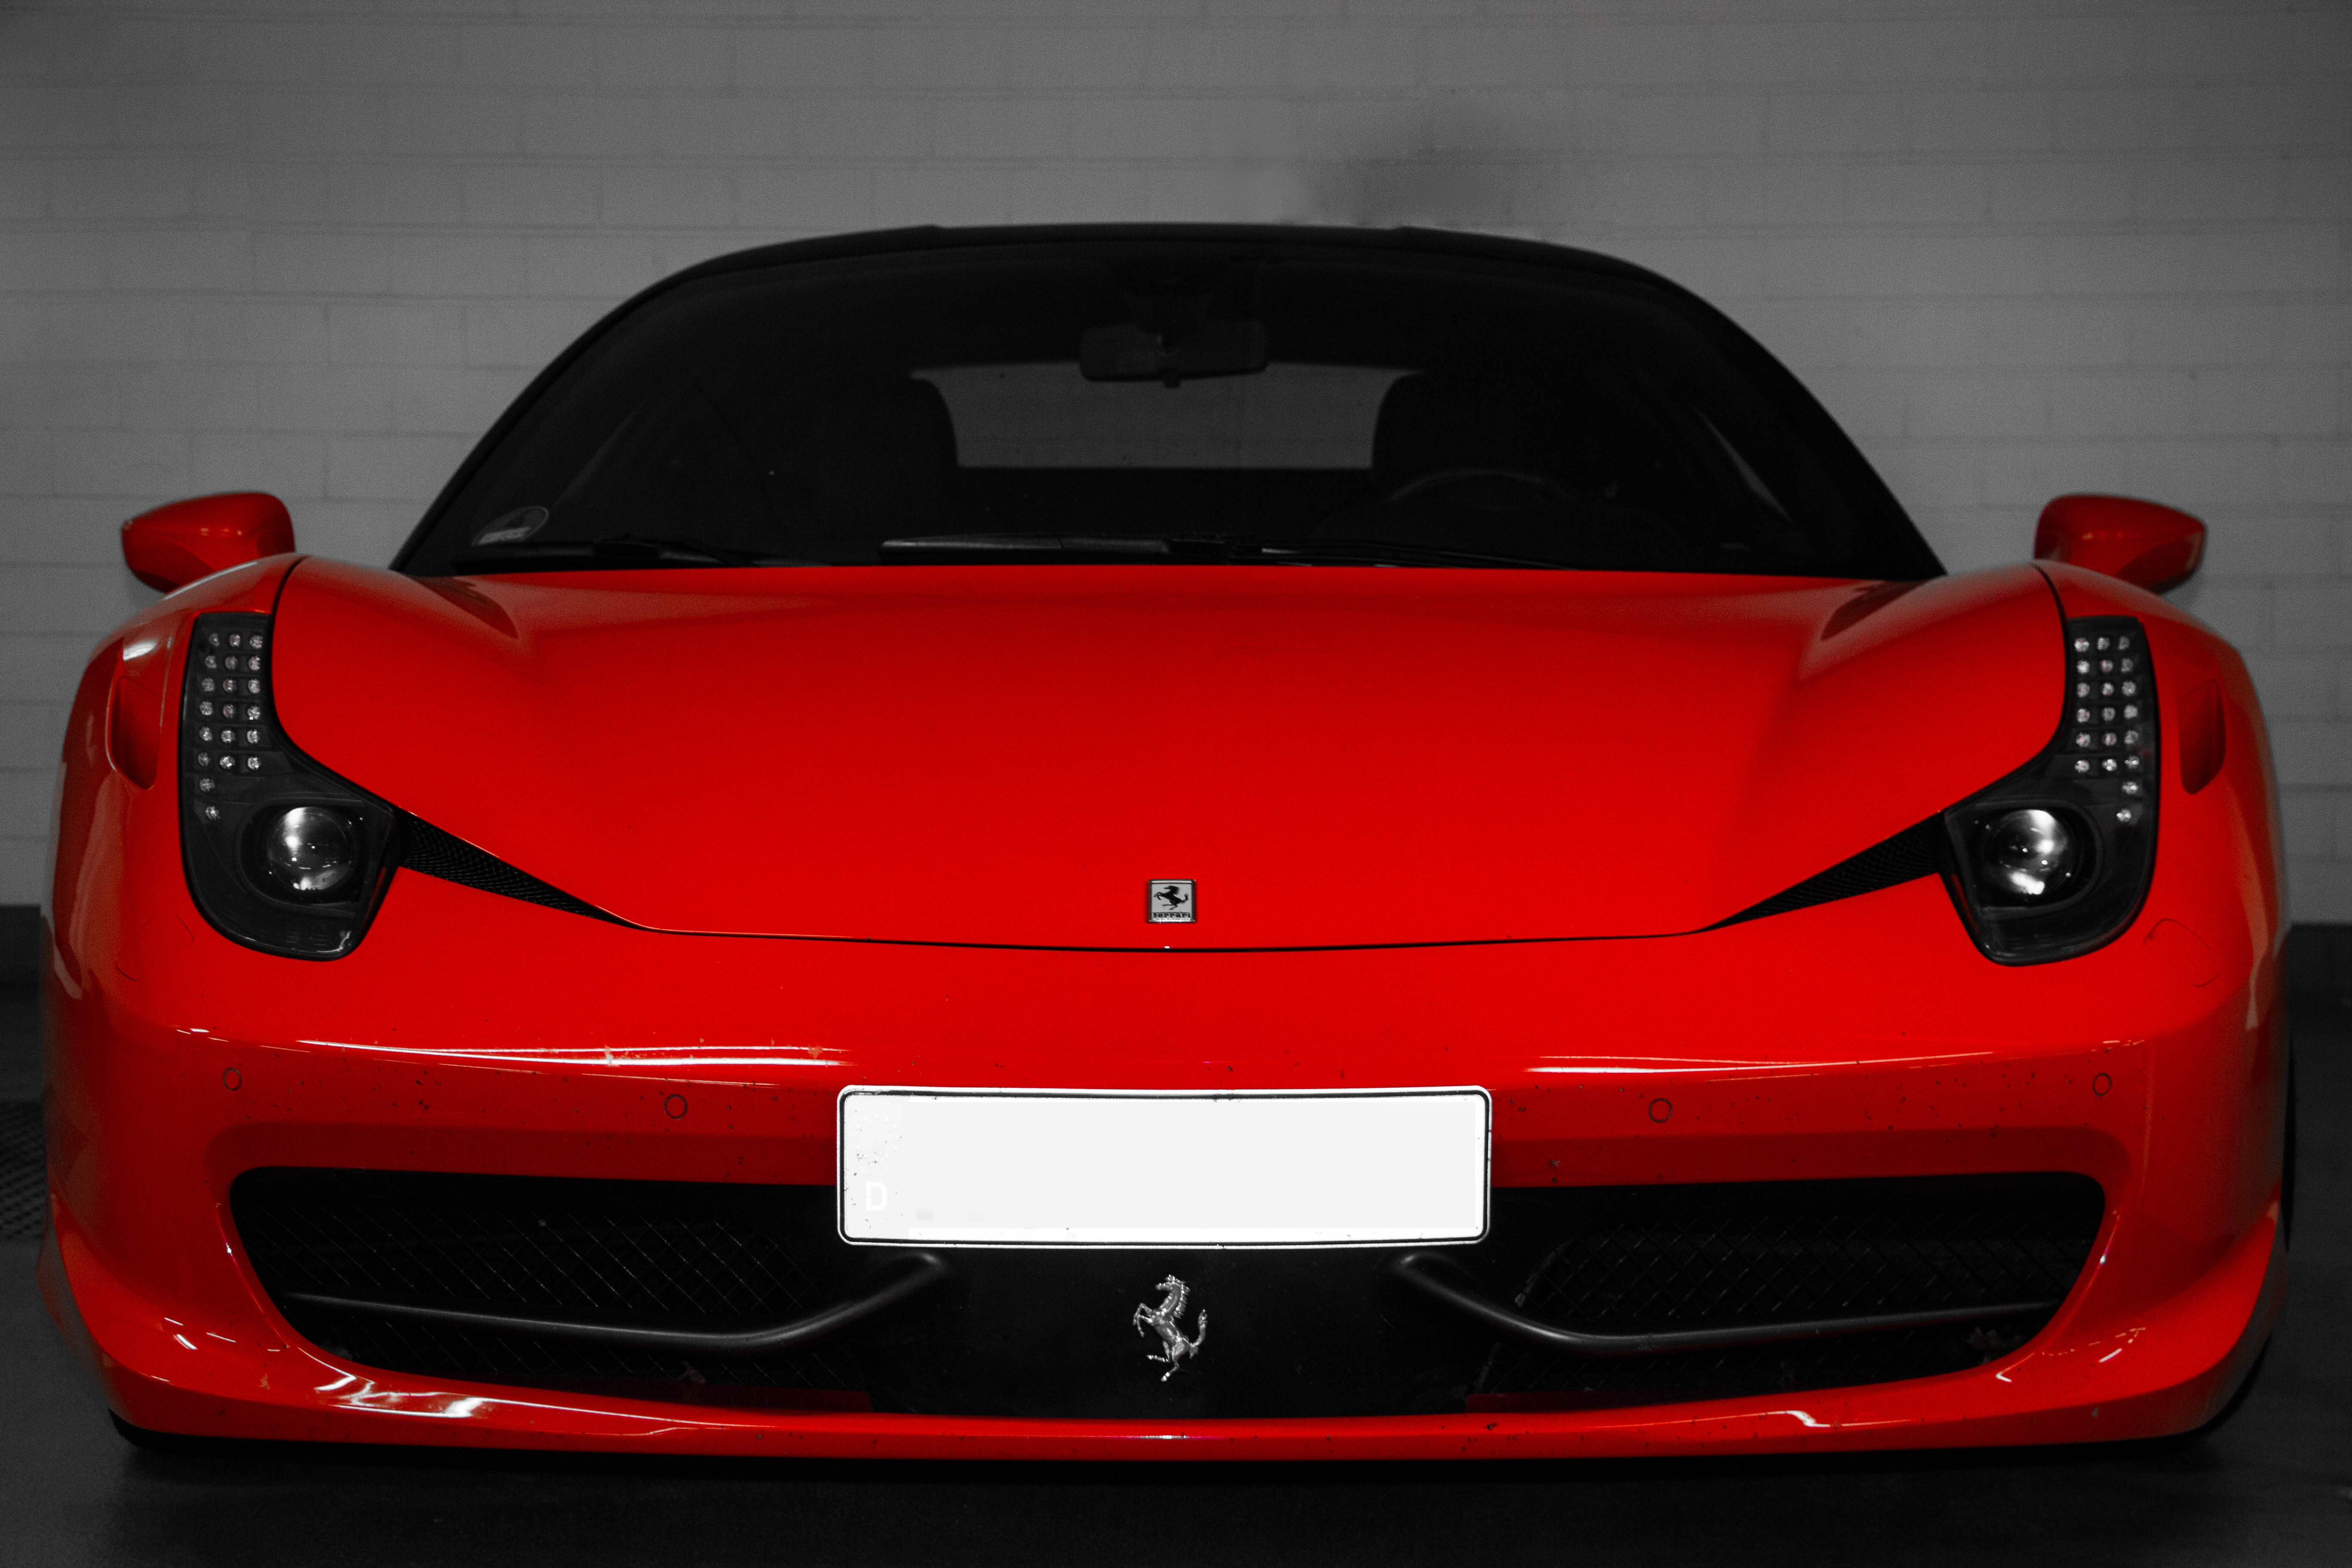 General 5472x3648 red cars car vehicle Ferrari Ferrari 458 italian cars Stellantis